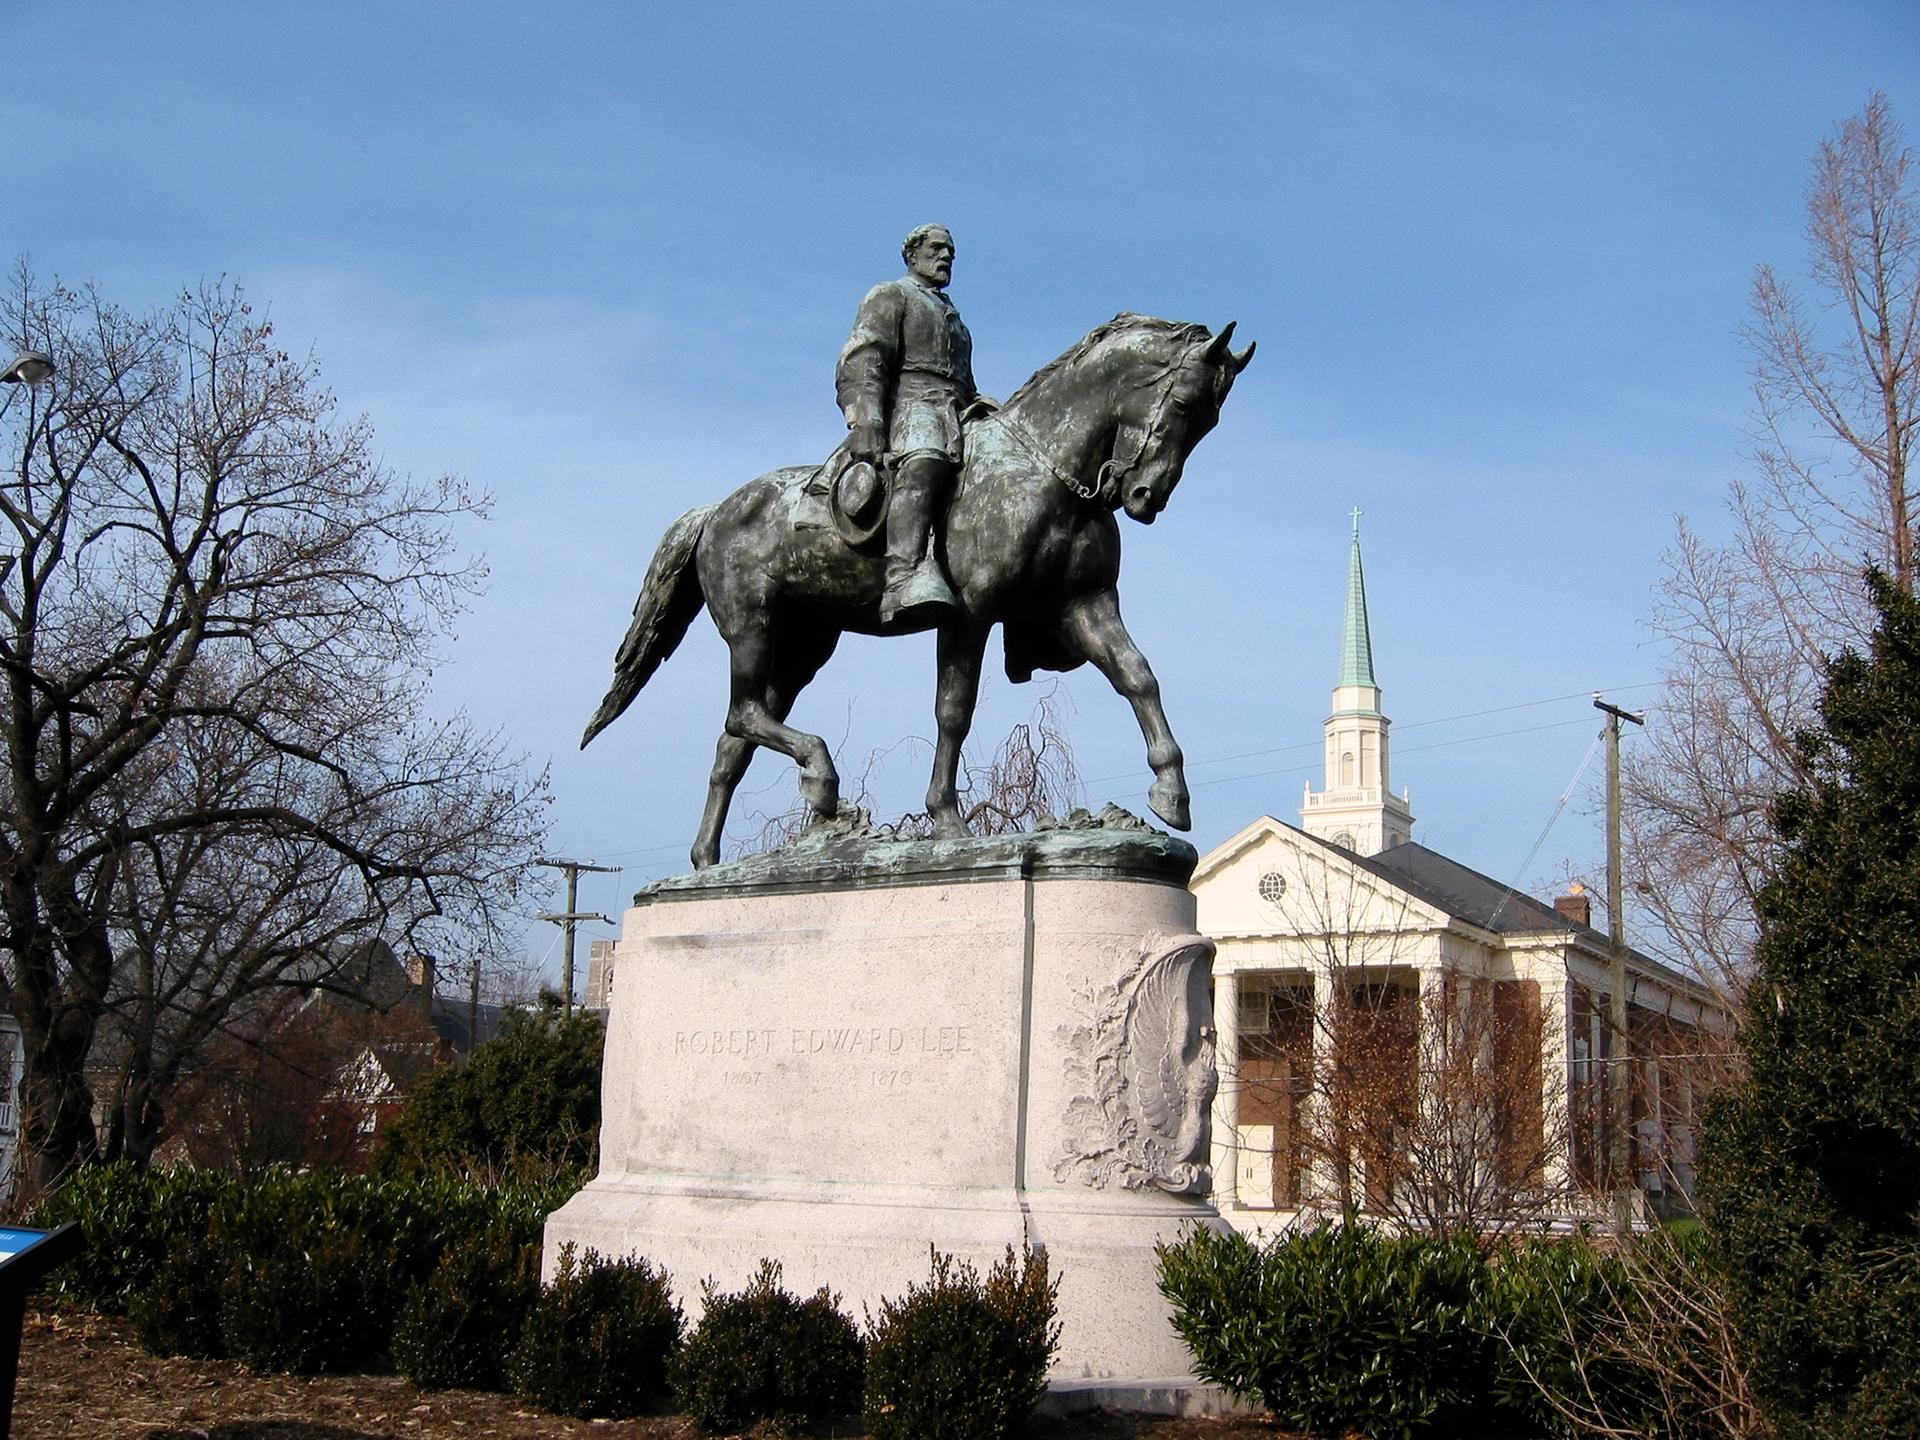 A statue of Robert E. Lee in Charlottesville, Virginia 